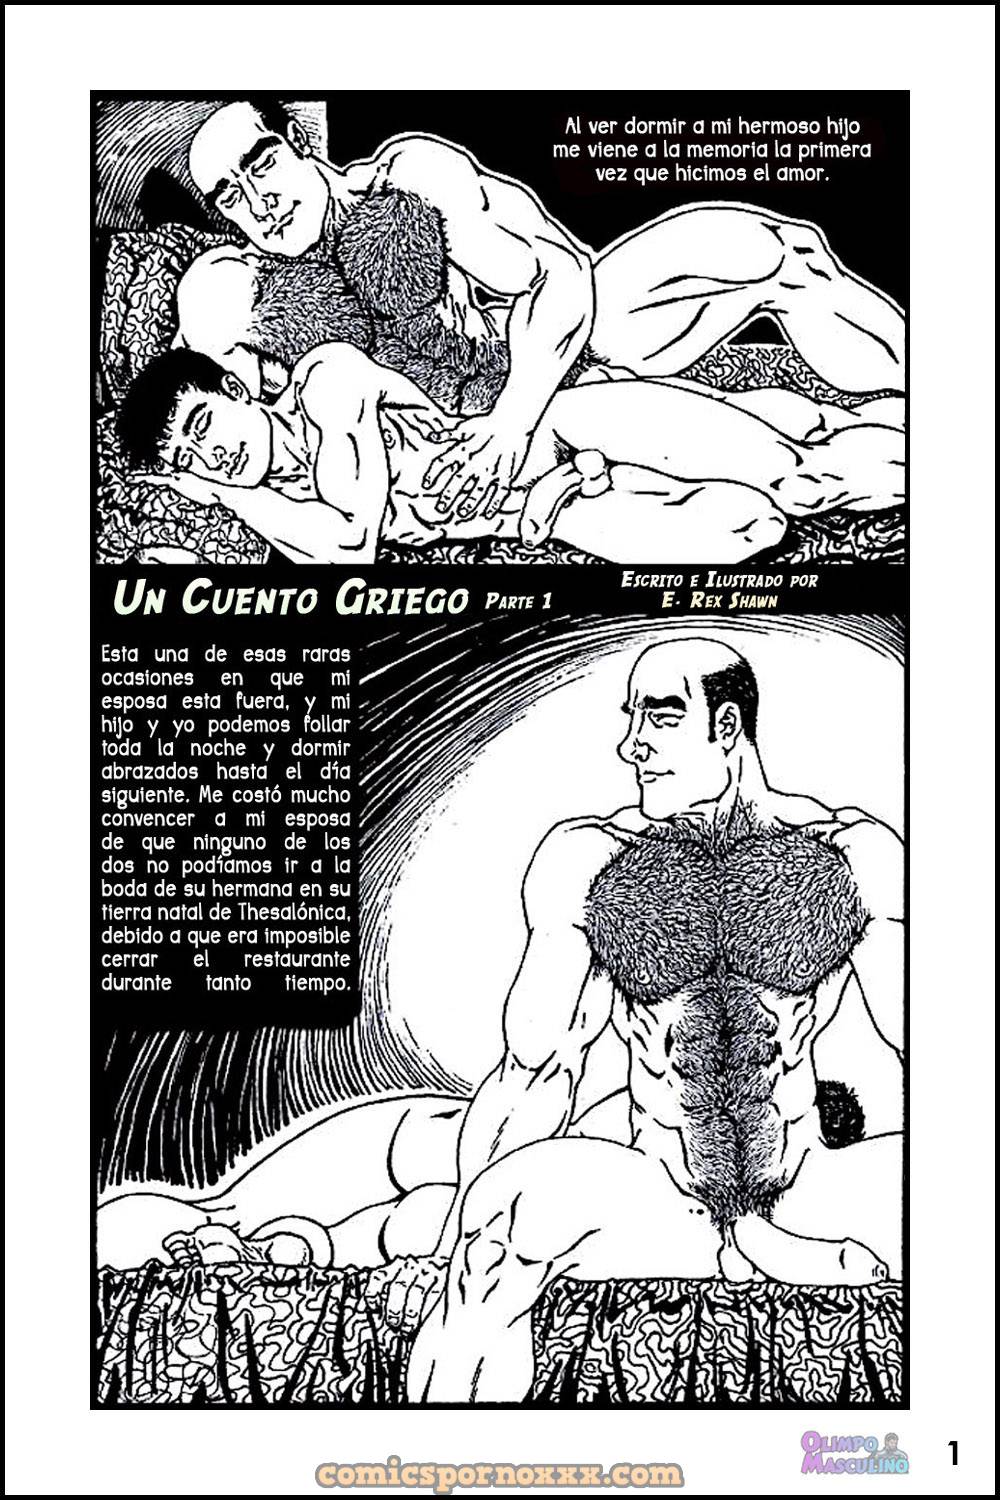 Un Cuento Griego #1 - 1 - Comics Porno - Hentai Manga - Cartoon XXX